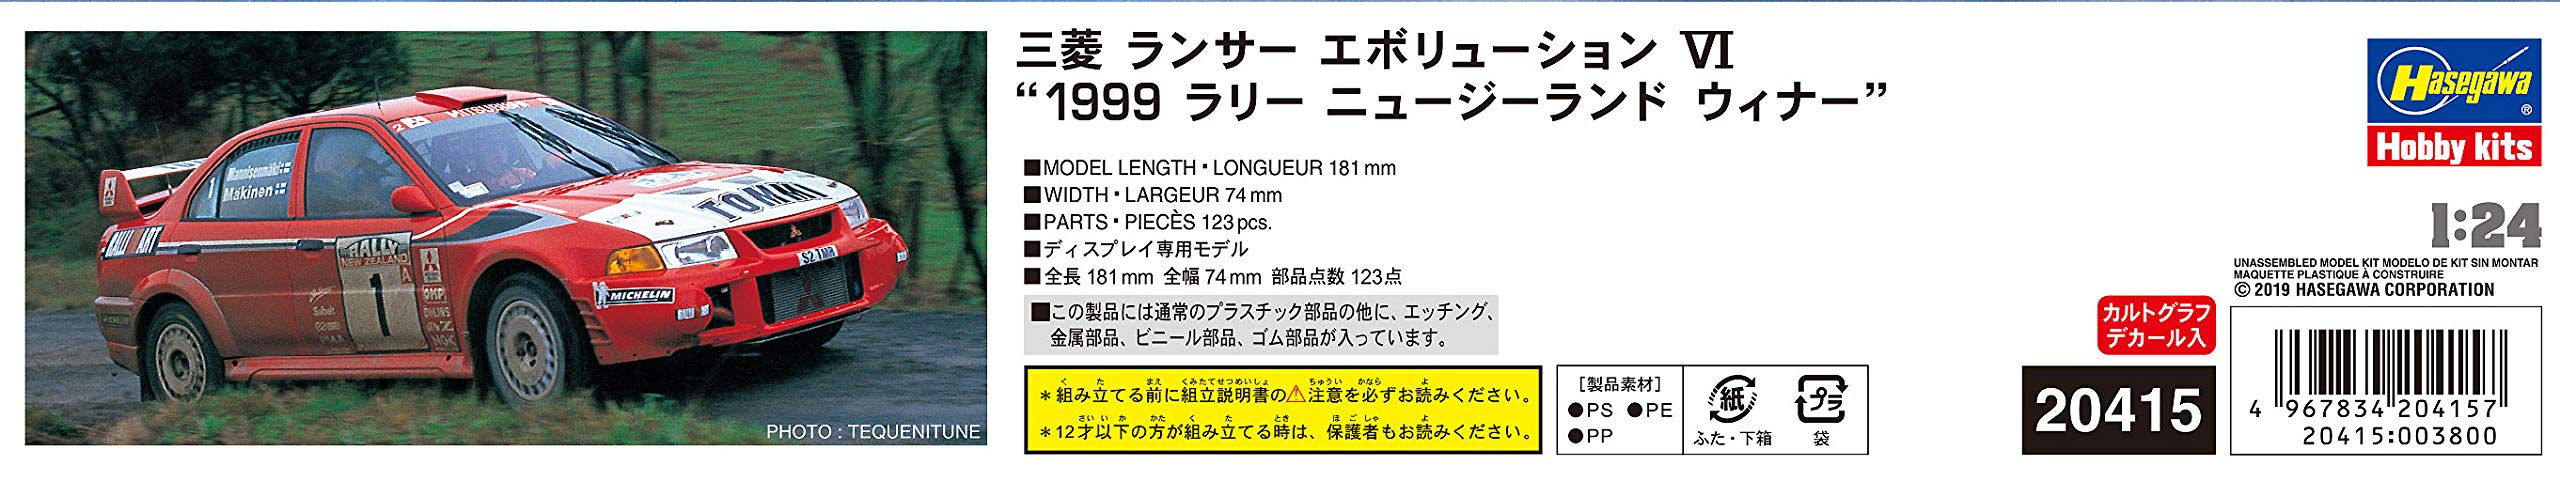 Hasegawa 20415 Mitsubishi Lancer Evolution VI 1999 Rallye Neuseeland Sieger Bausatz im Maßstab 1/24